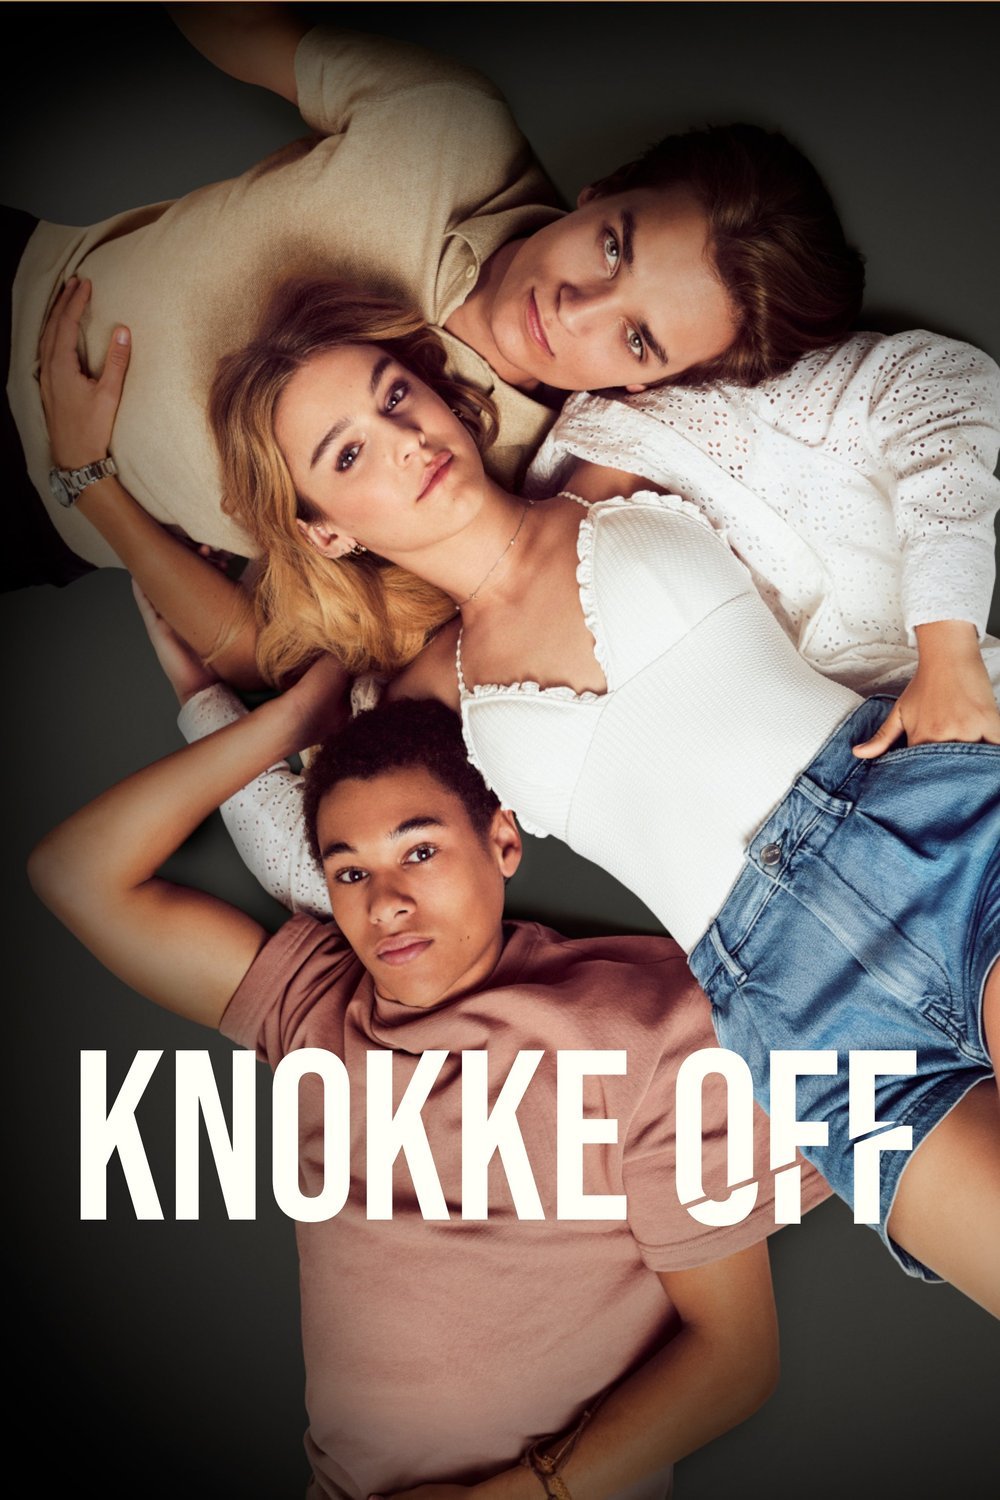 L'affiche originale du film Knokke Off en Néerlandais